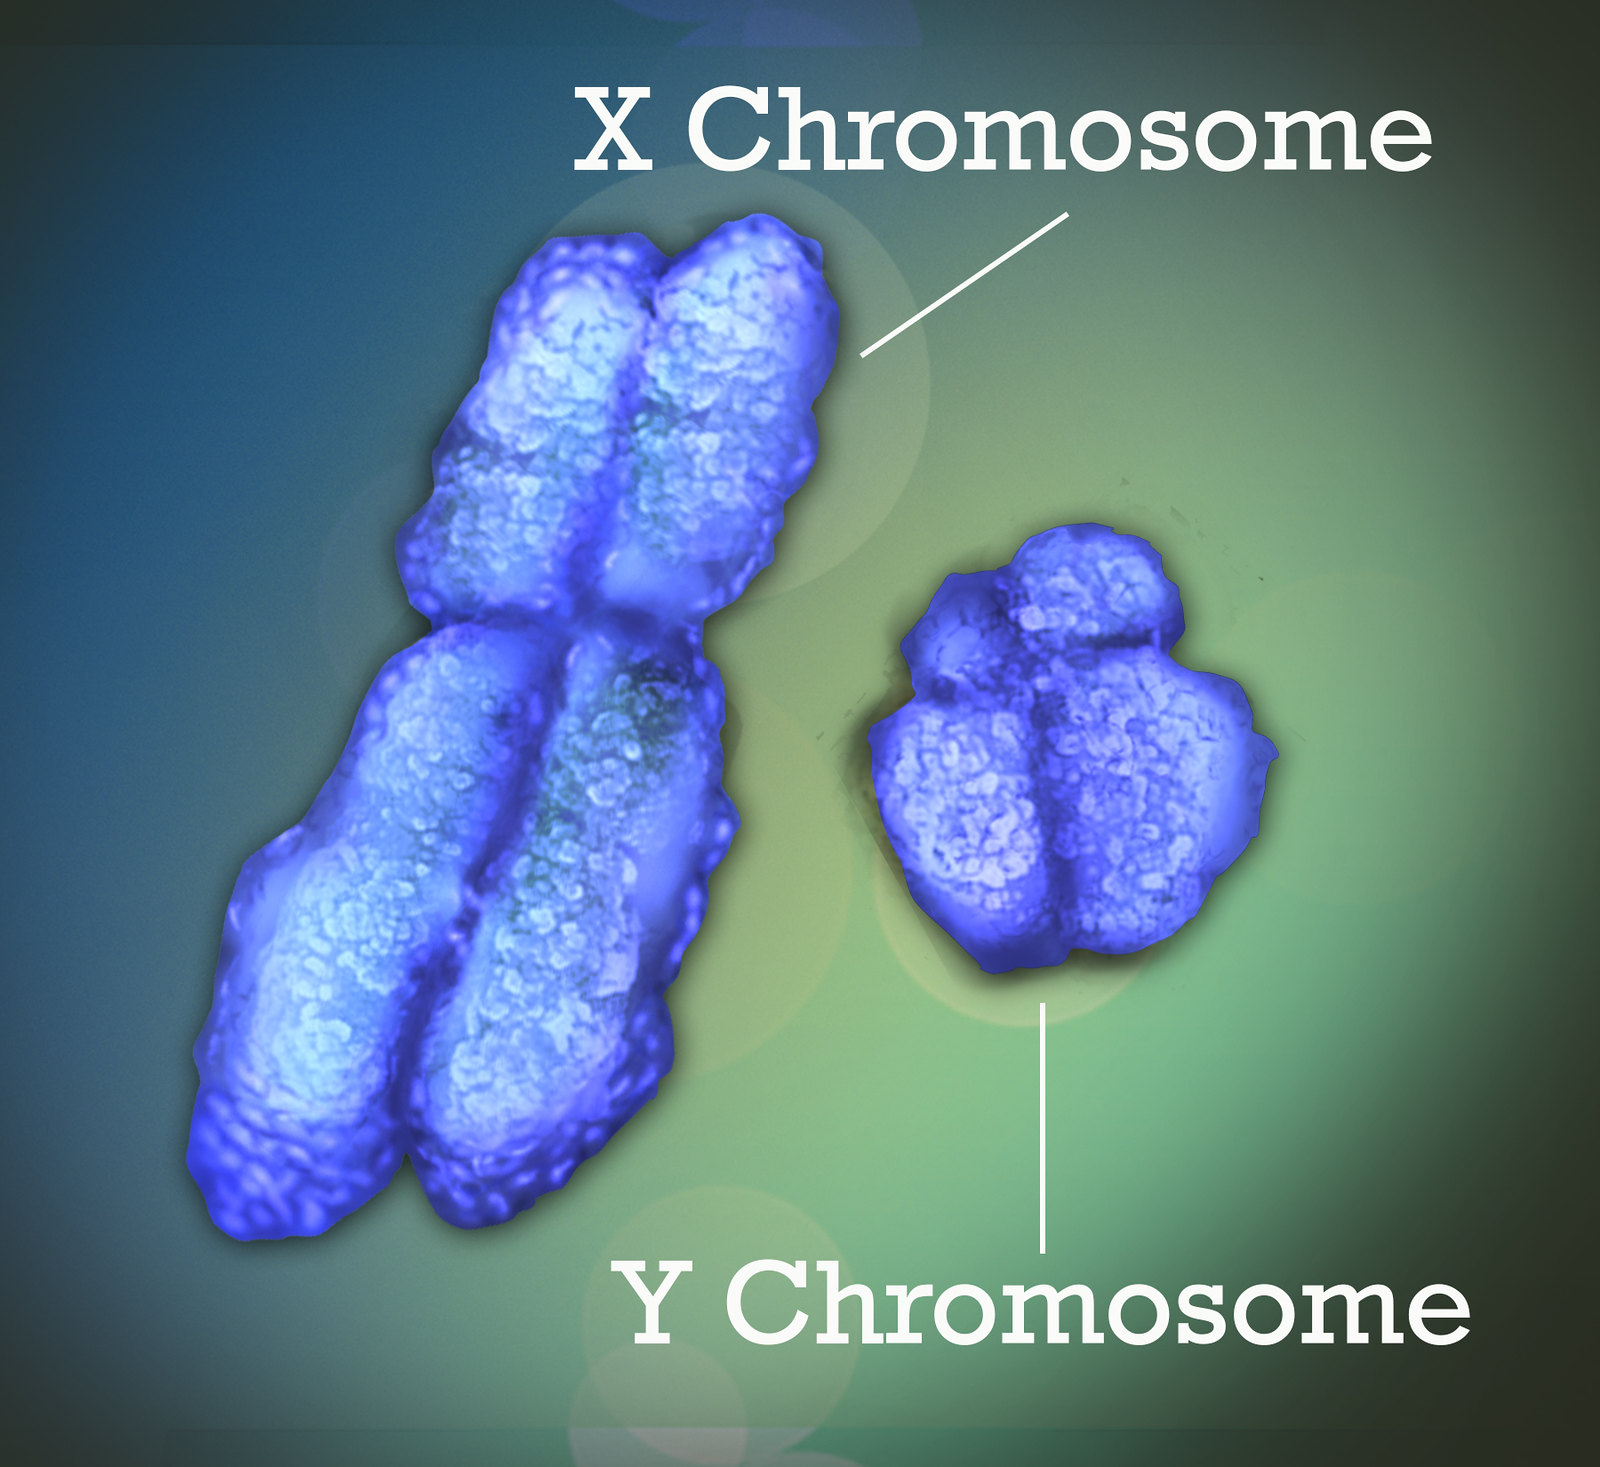 X and Y chromosome illustration